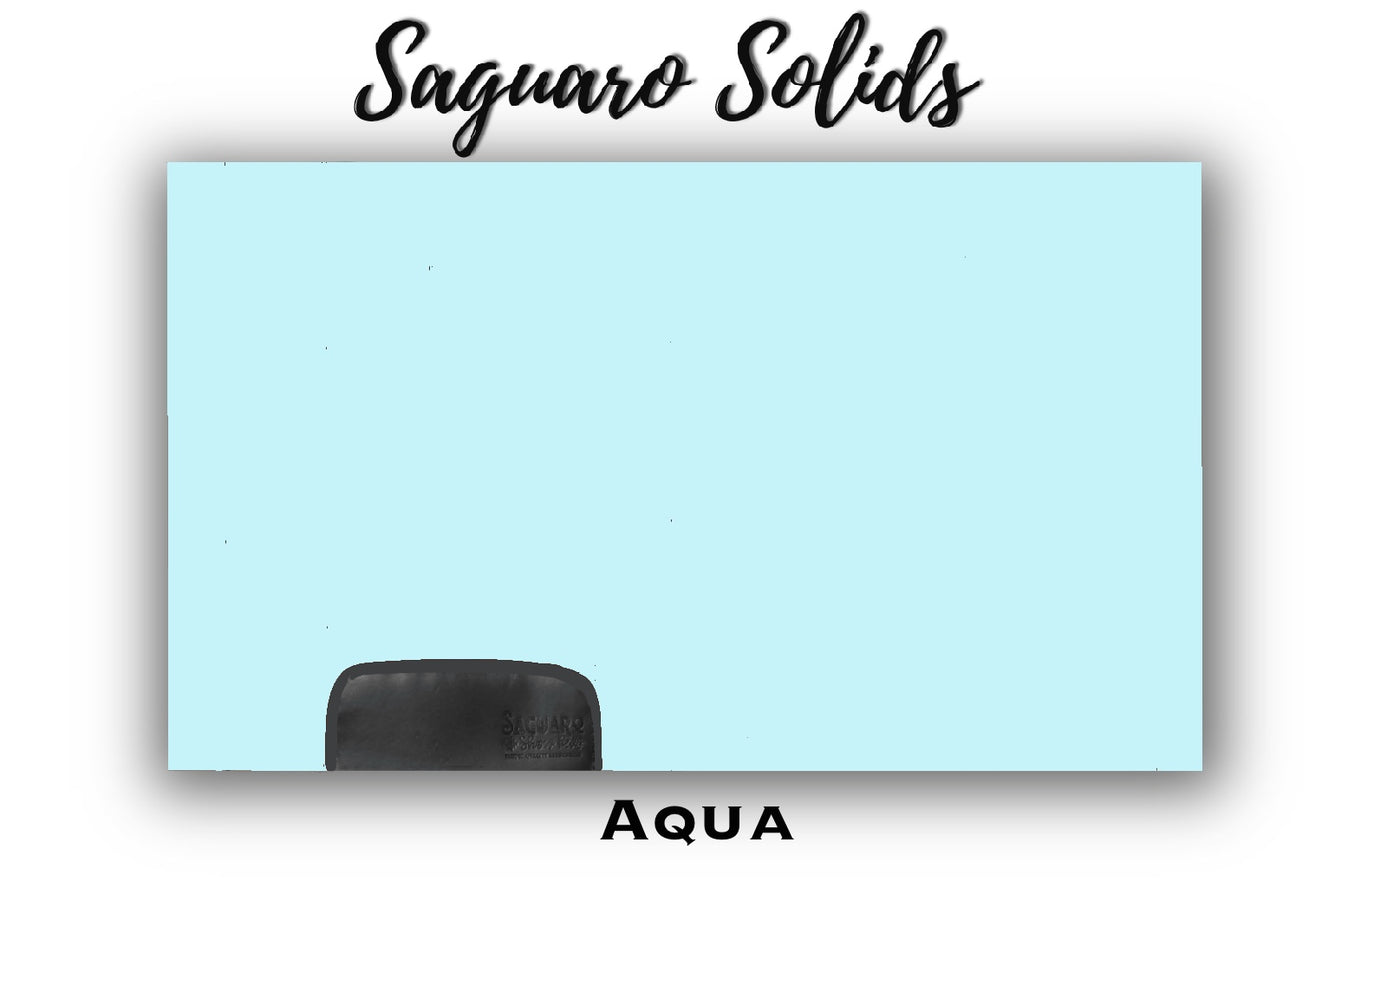 Saguaro Solid "Aqua" Show Pad (SEMI-CUSTOM)